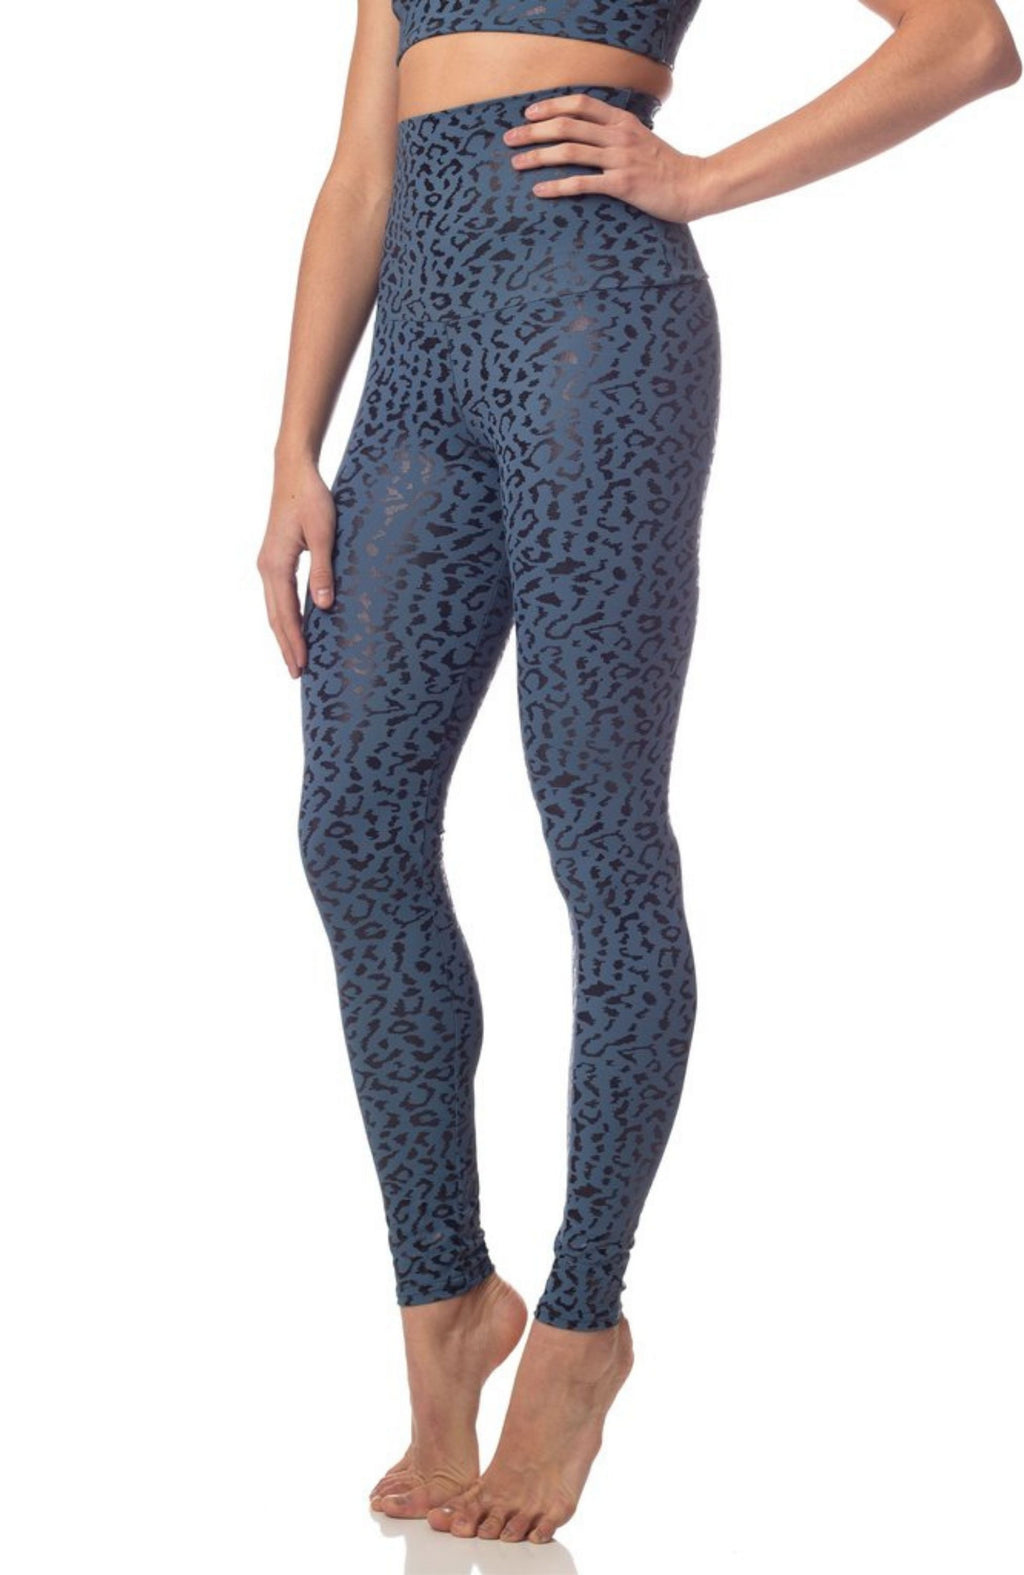 MRULIC yoga pants Pants Hip Fashion Lifting Yoga Women's Printing